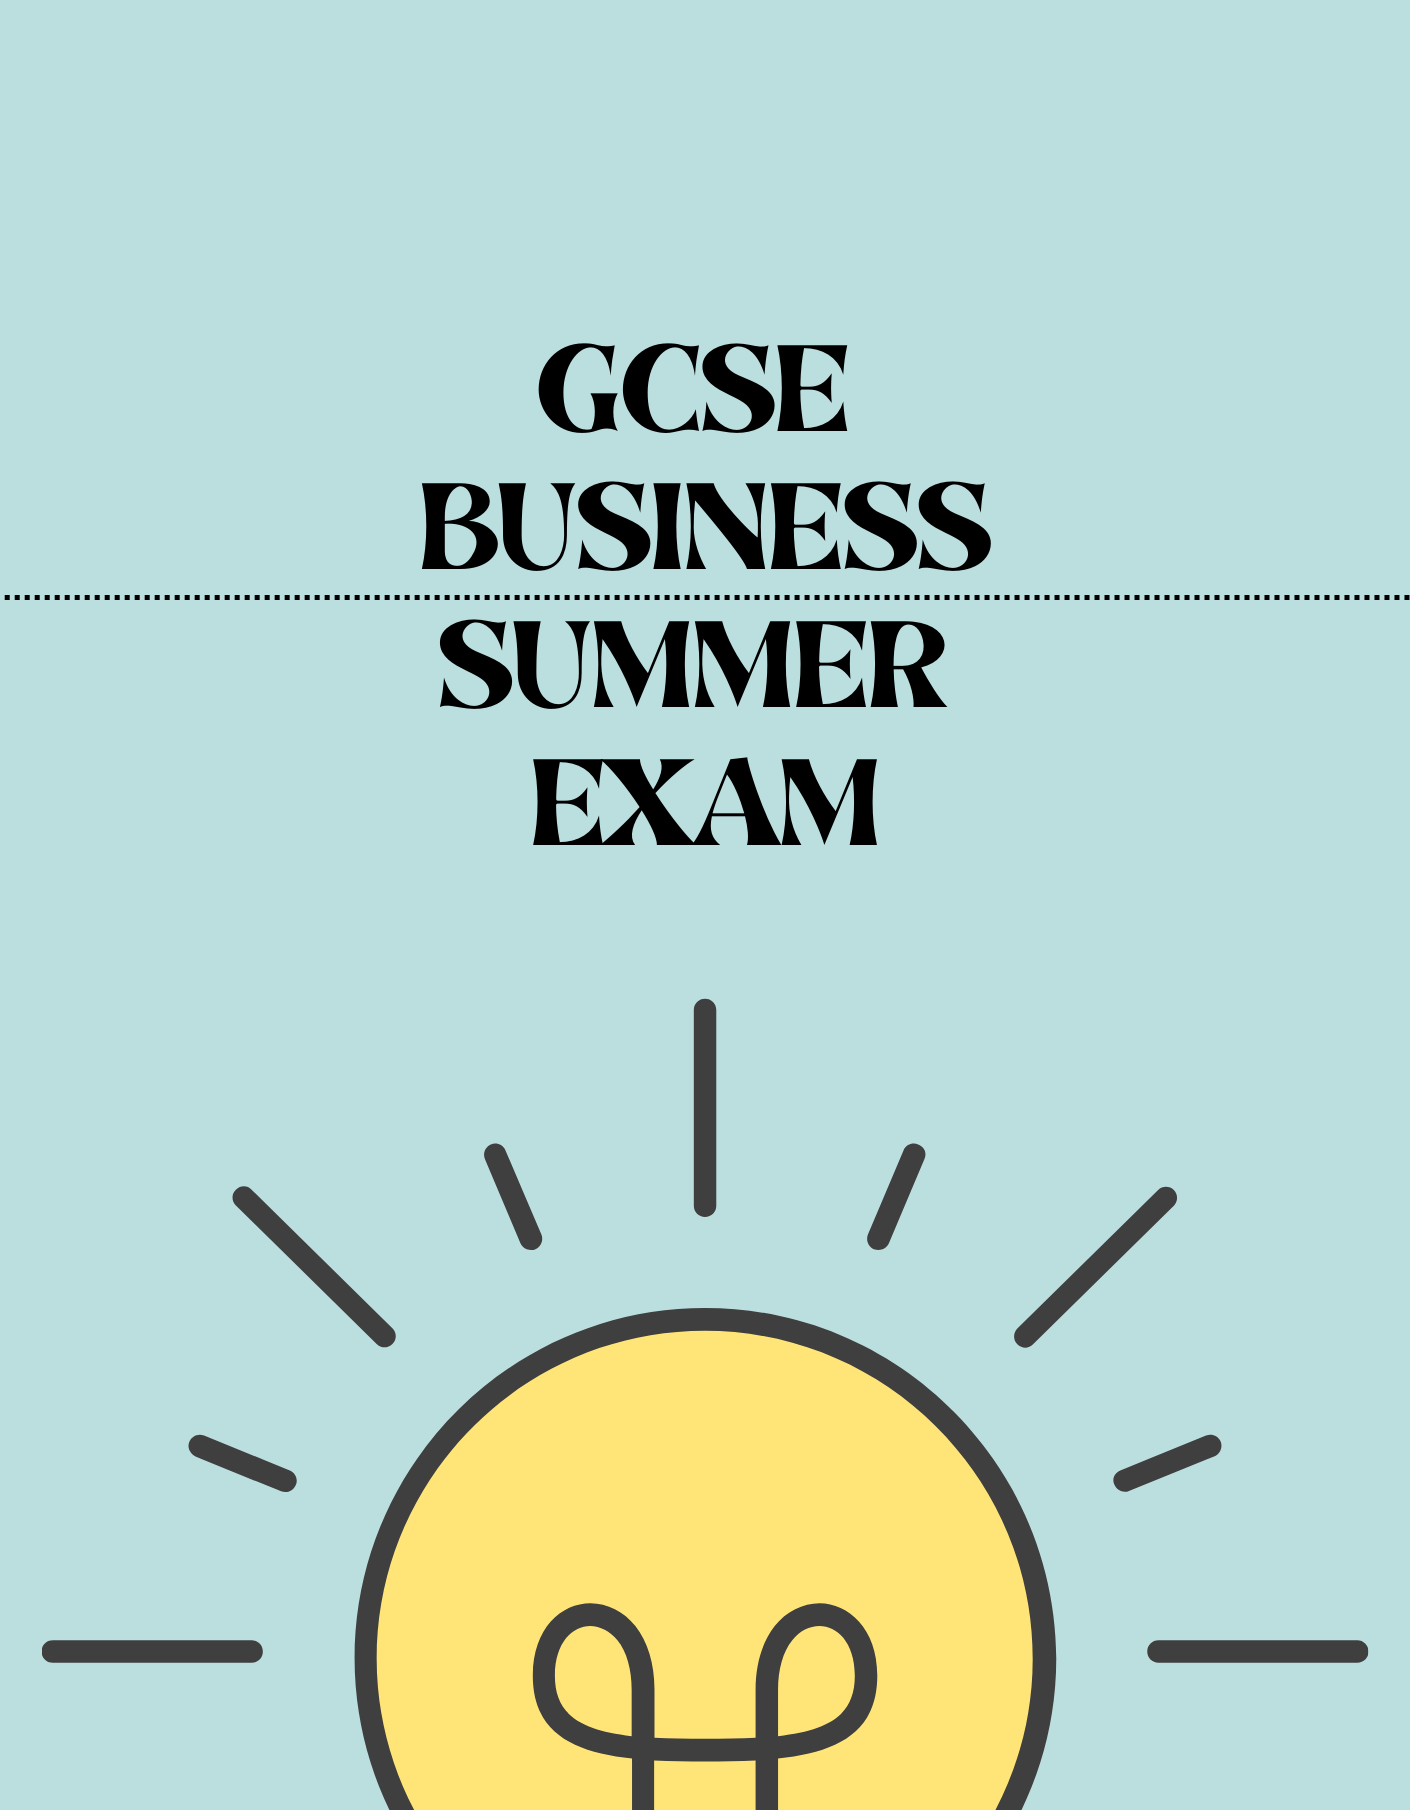 GCSE Business - Summer Exam - Exam Centre Birmingham Limited